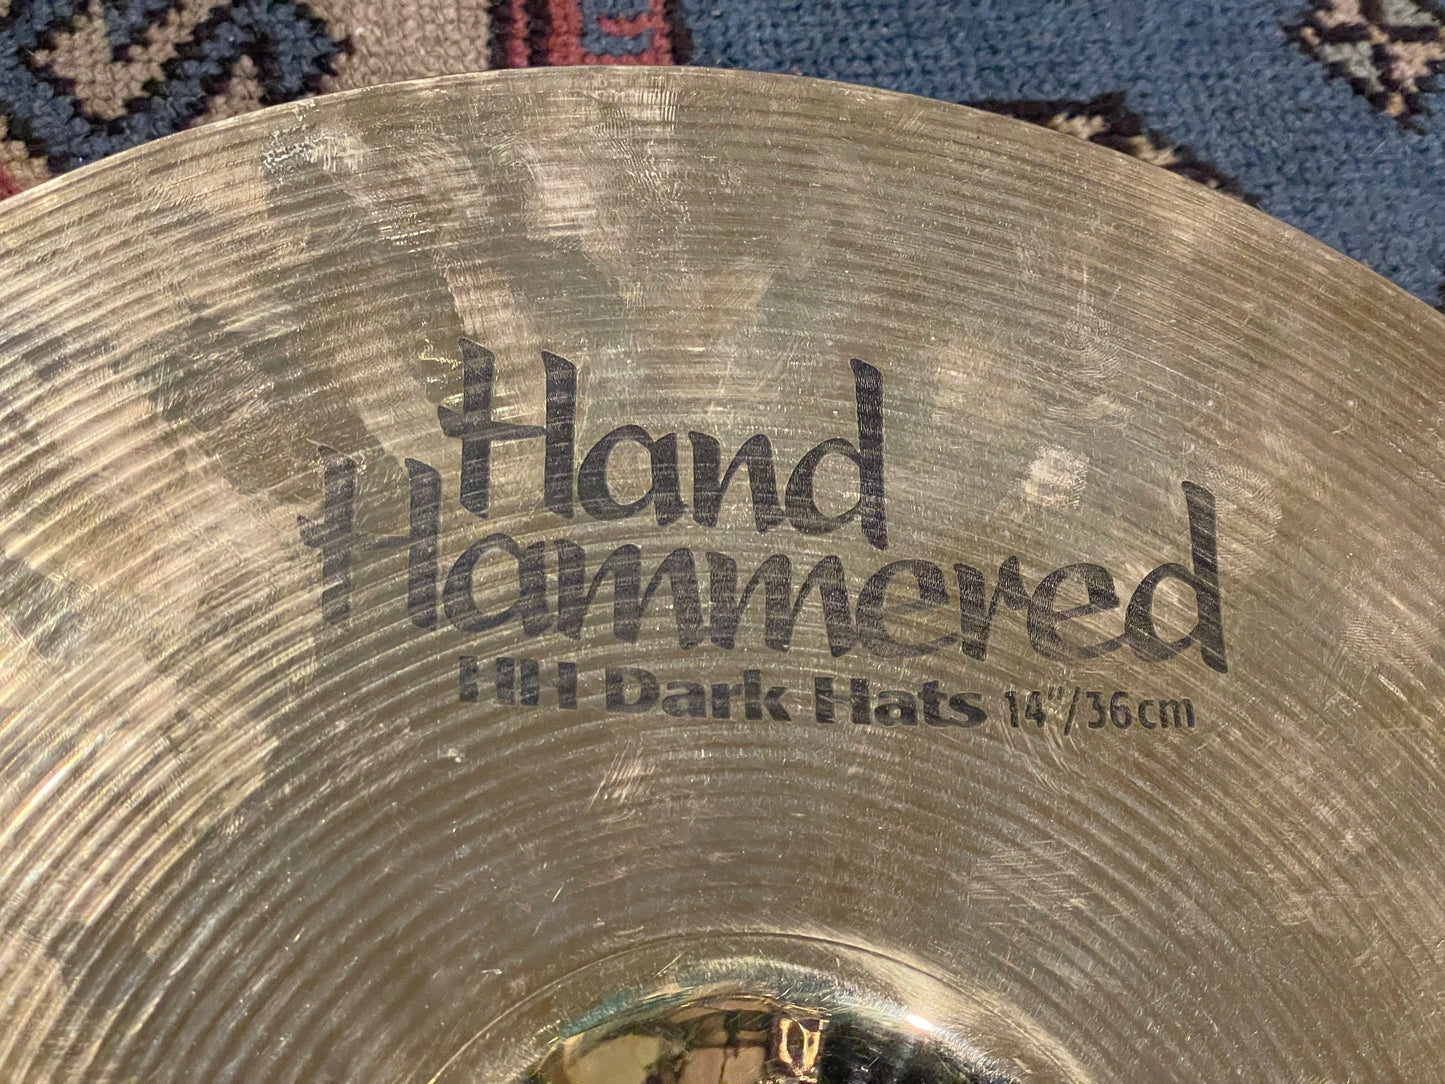 14" Sabian Hand Hammered HH Dark Hats Hi-Hat Cymbal Pair 958g/1048g